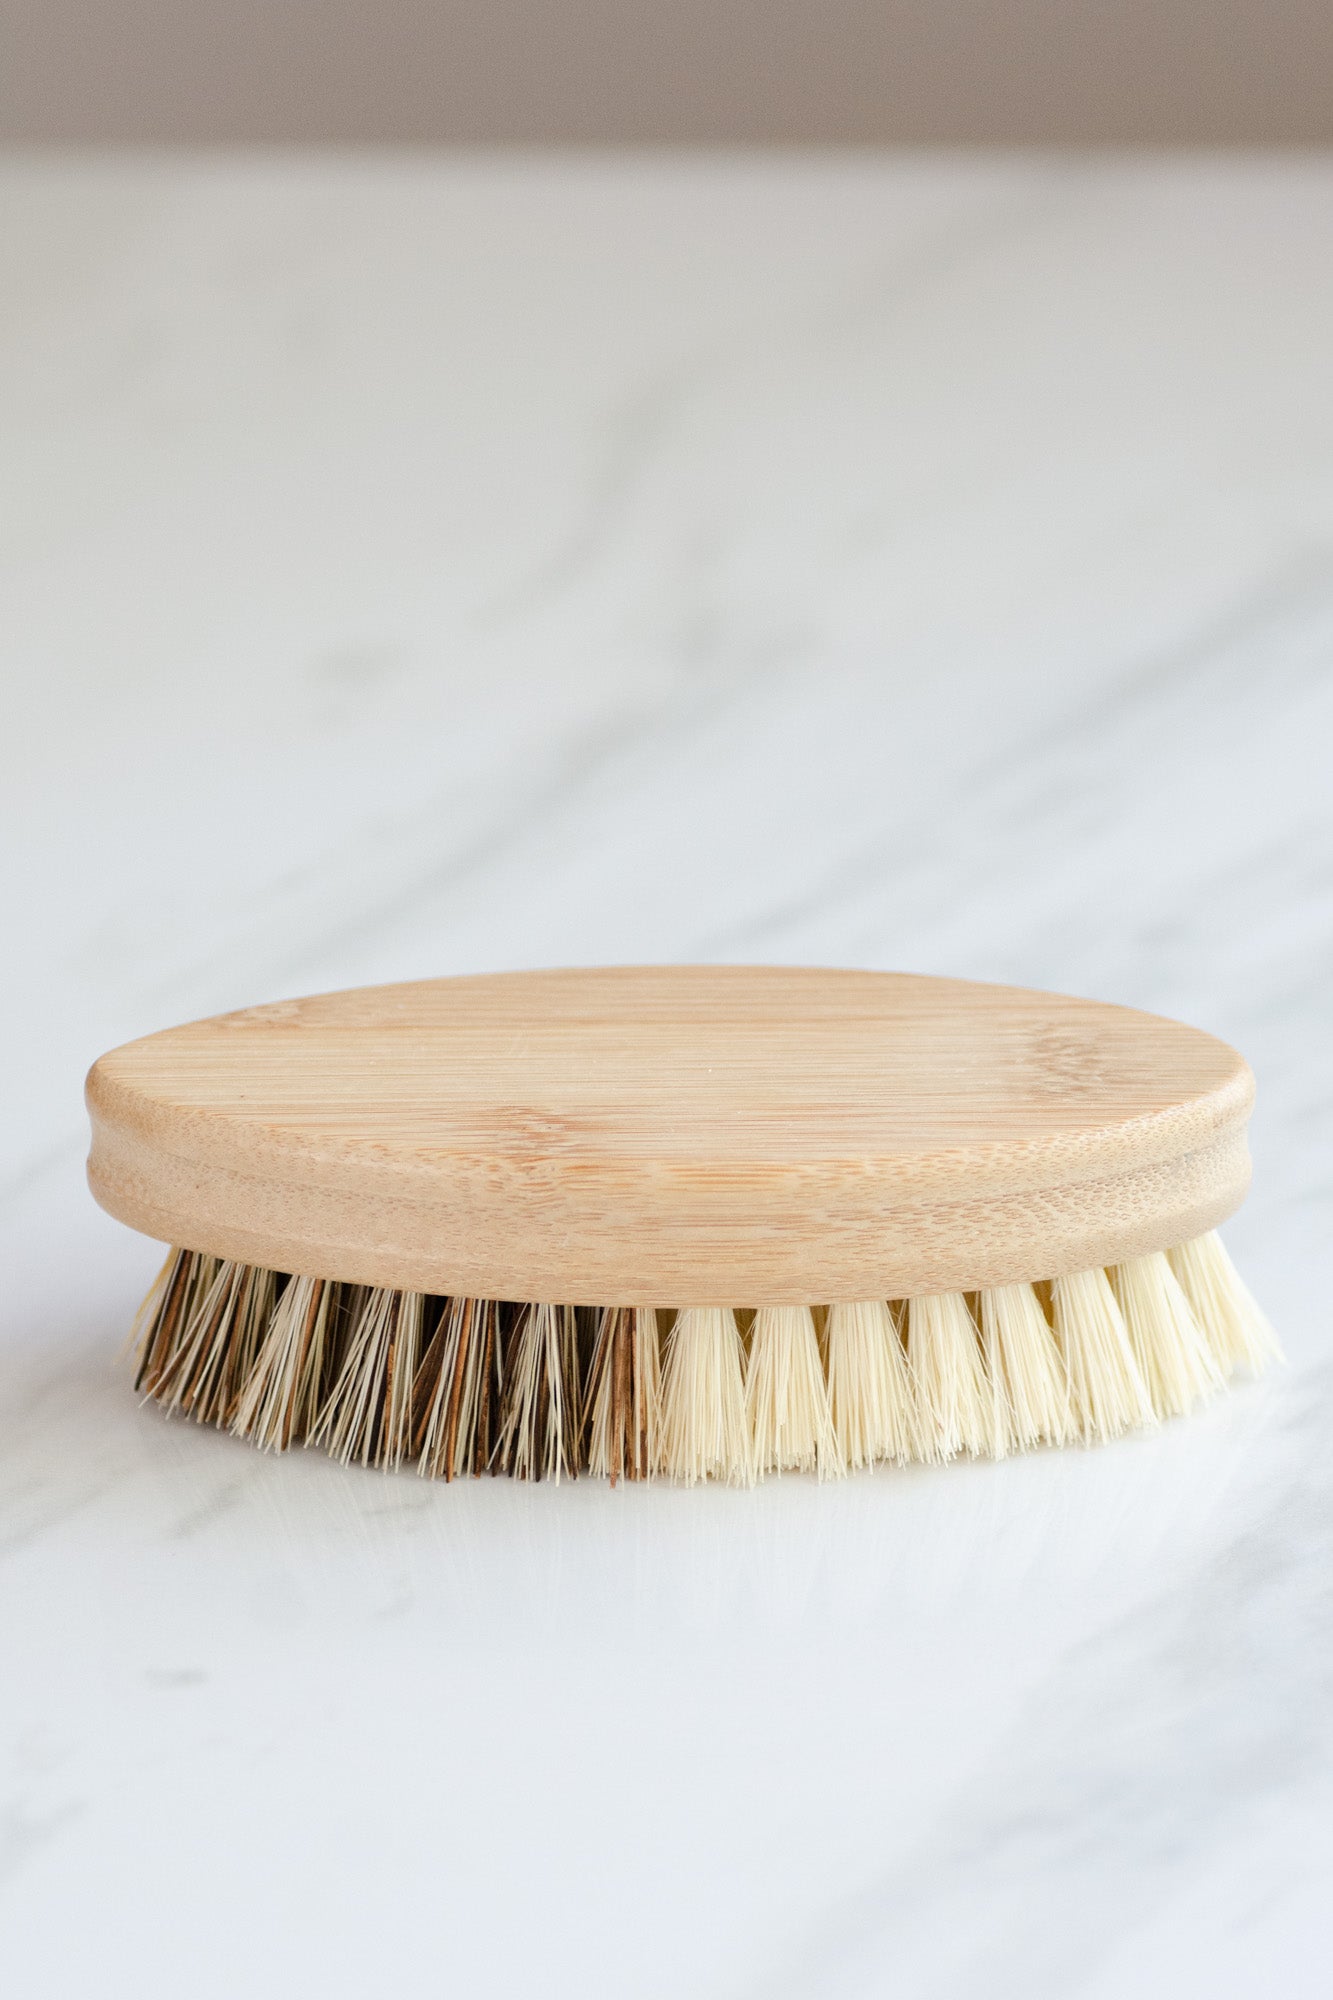 No Tox Life Casa Agave Pot Scrubber Brush